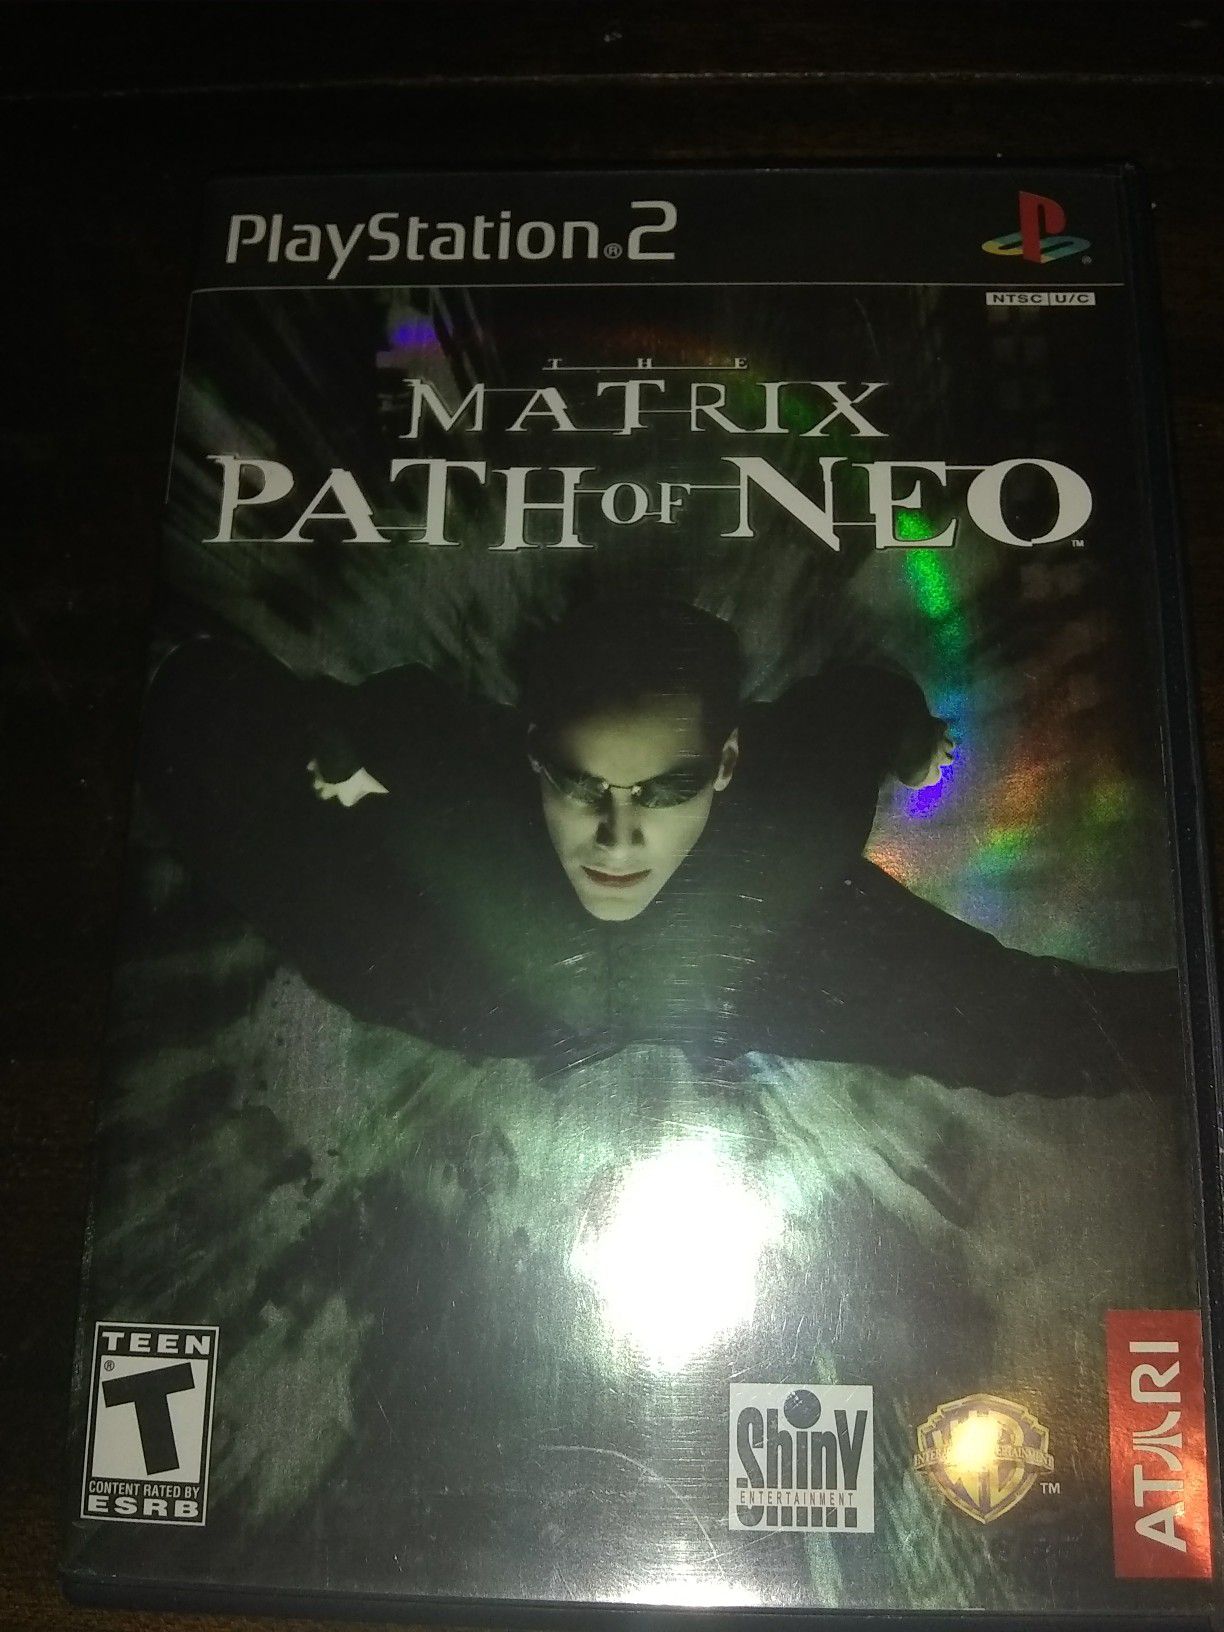 The Matrix Path of Neo PS2